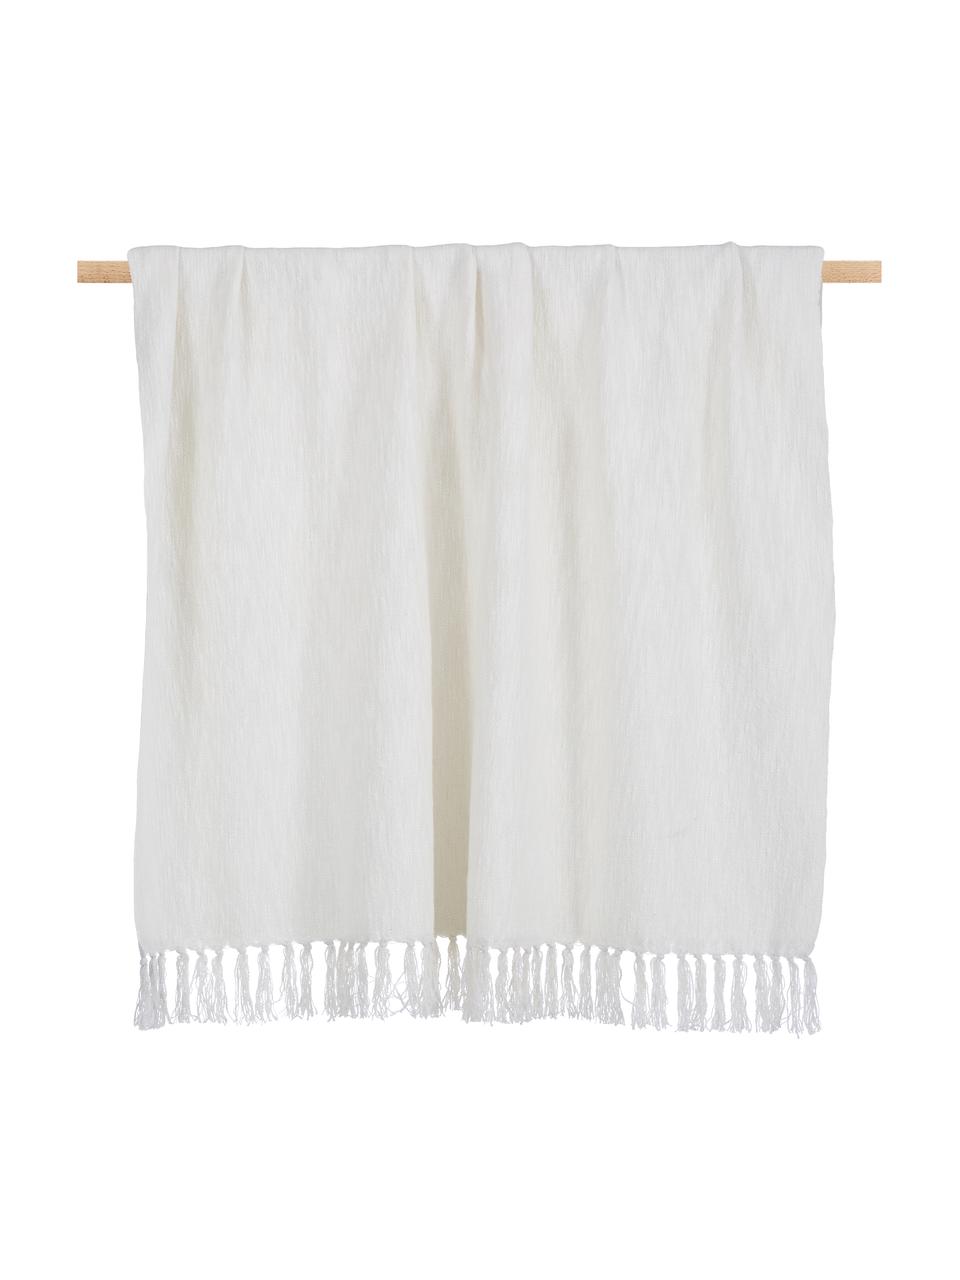 Manta de algodón con flecos Toly, 100% algodón, Blanco crema, An 130 x L 170 cm